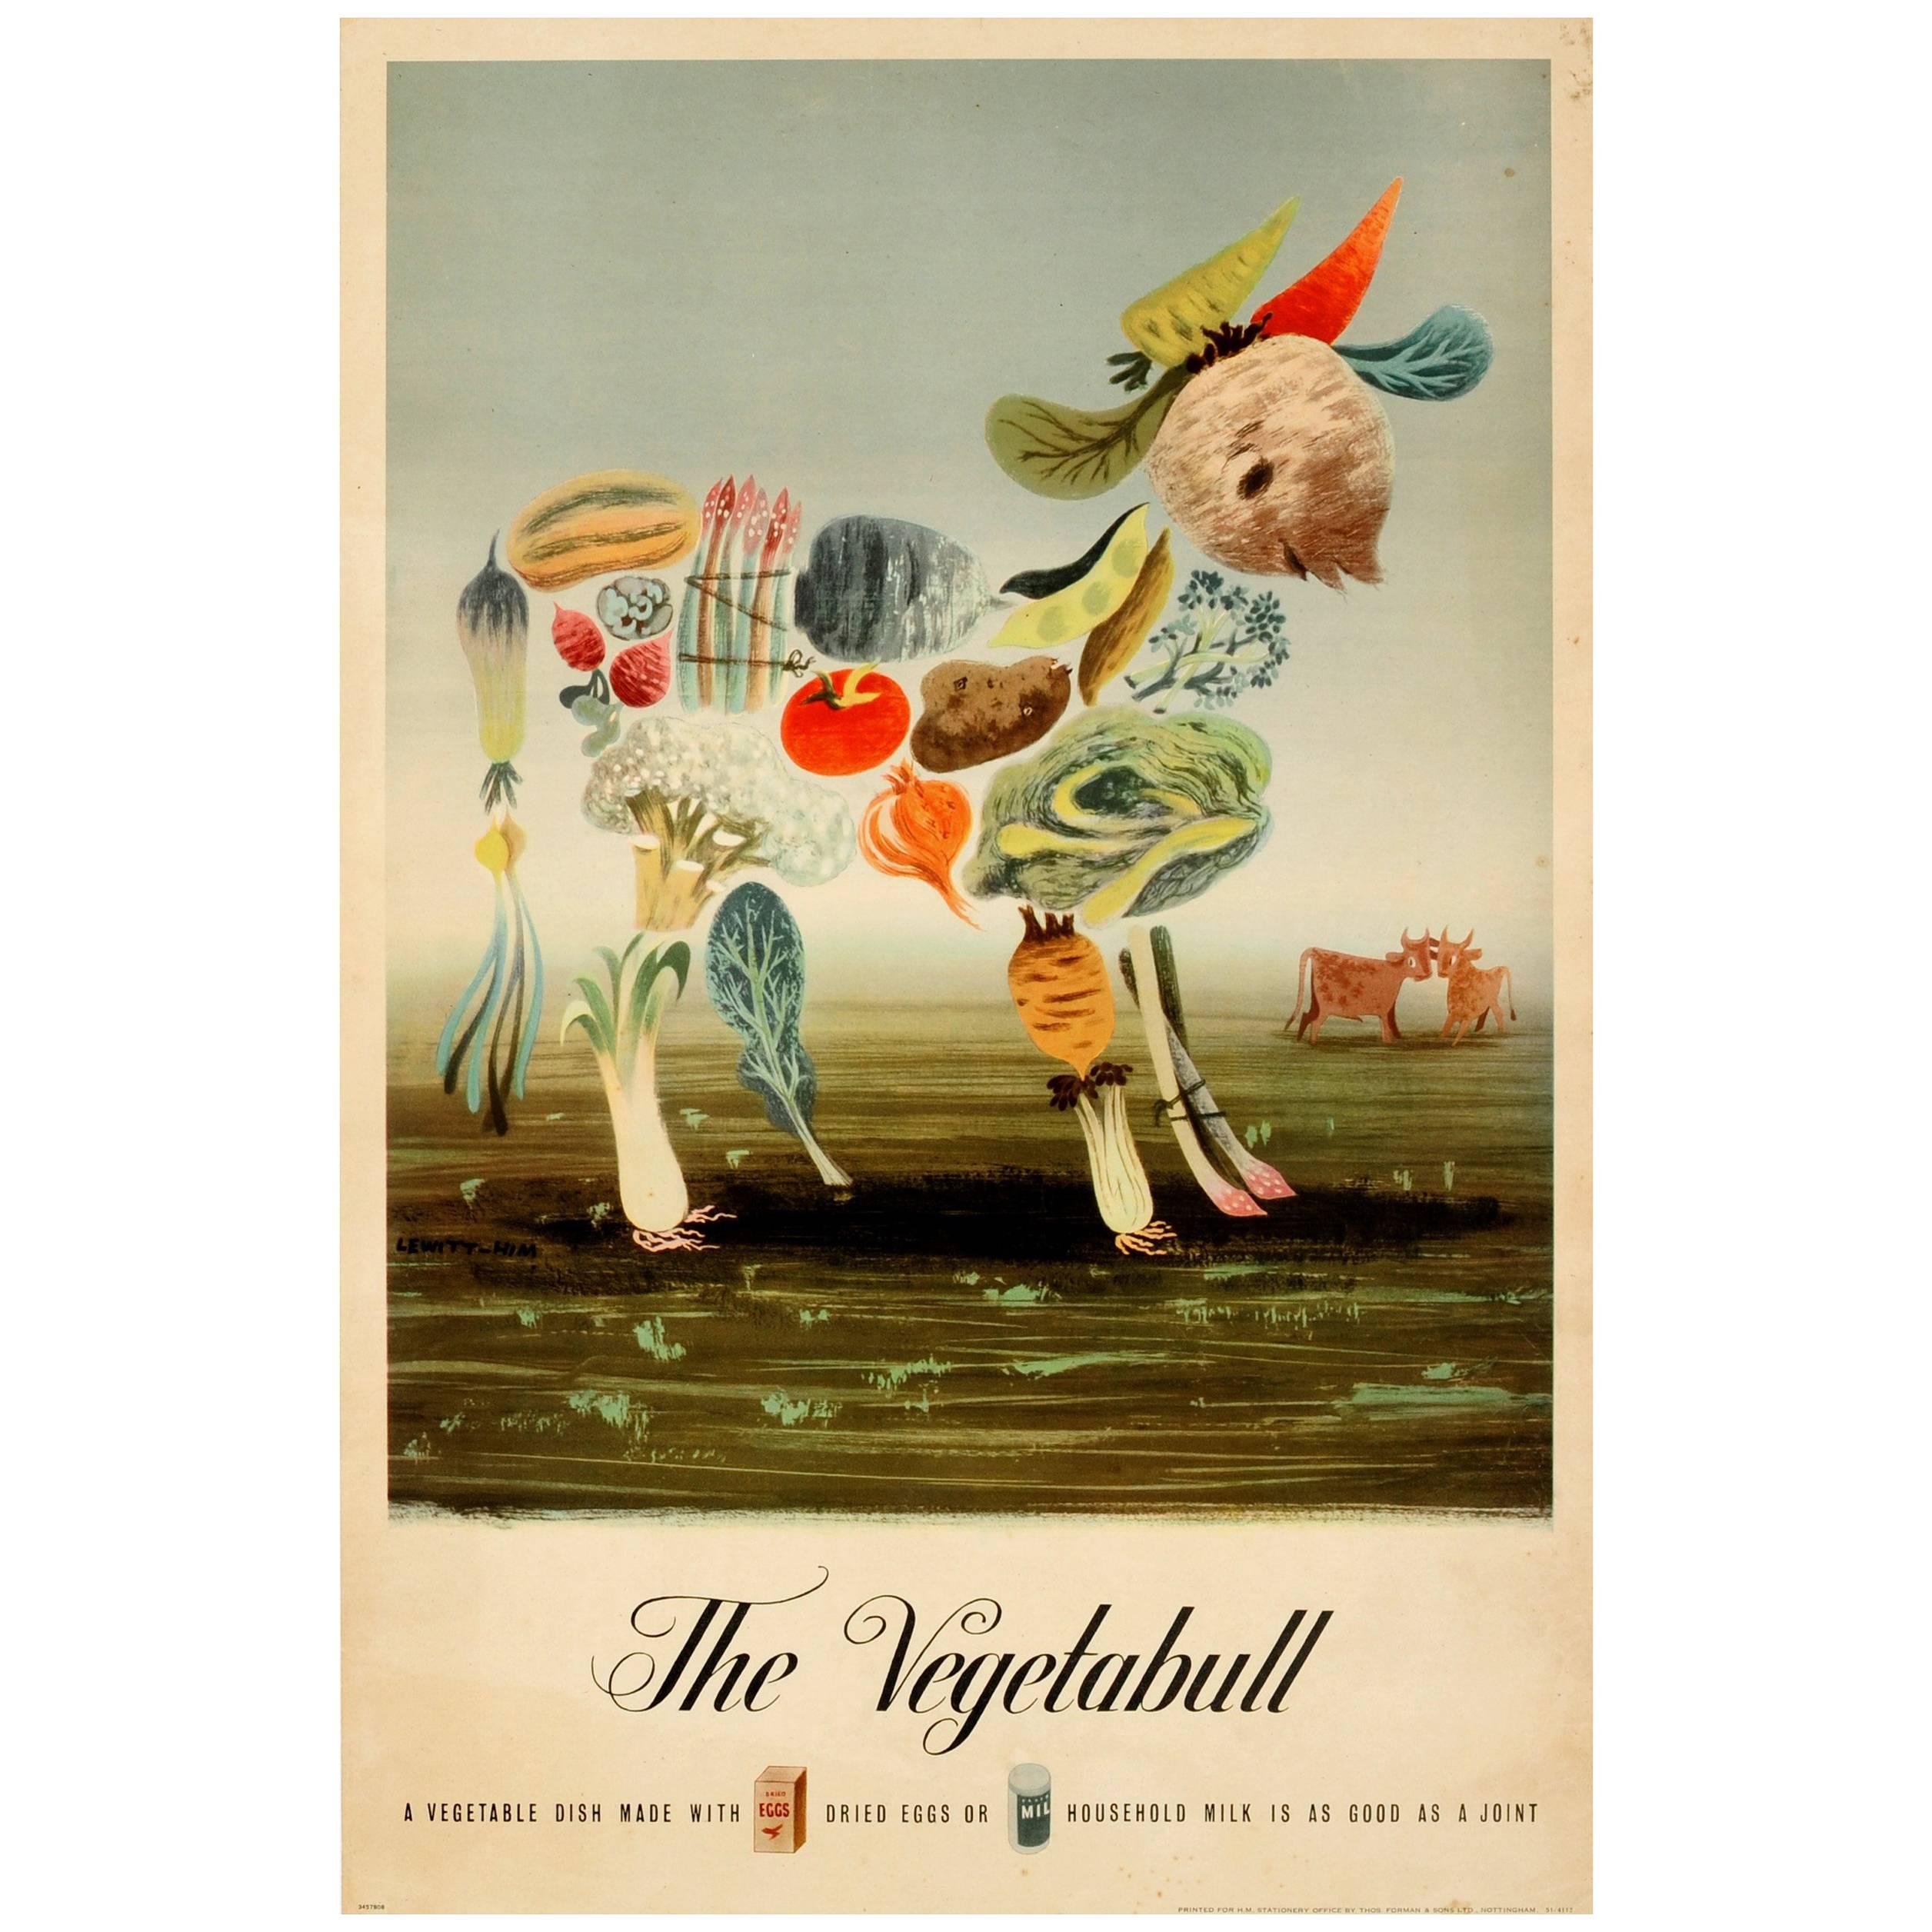 Original Vintage WWII Food Propaganda Poster By Lewitt-Him - The Vegetabull